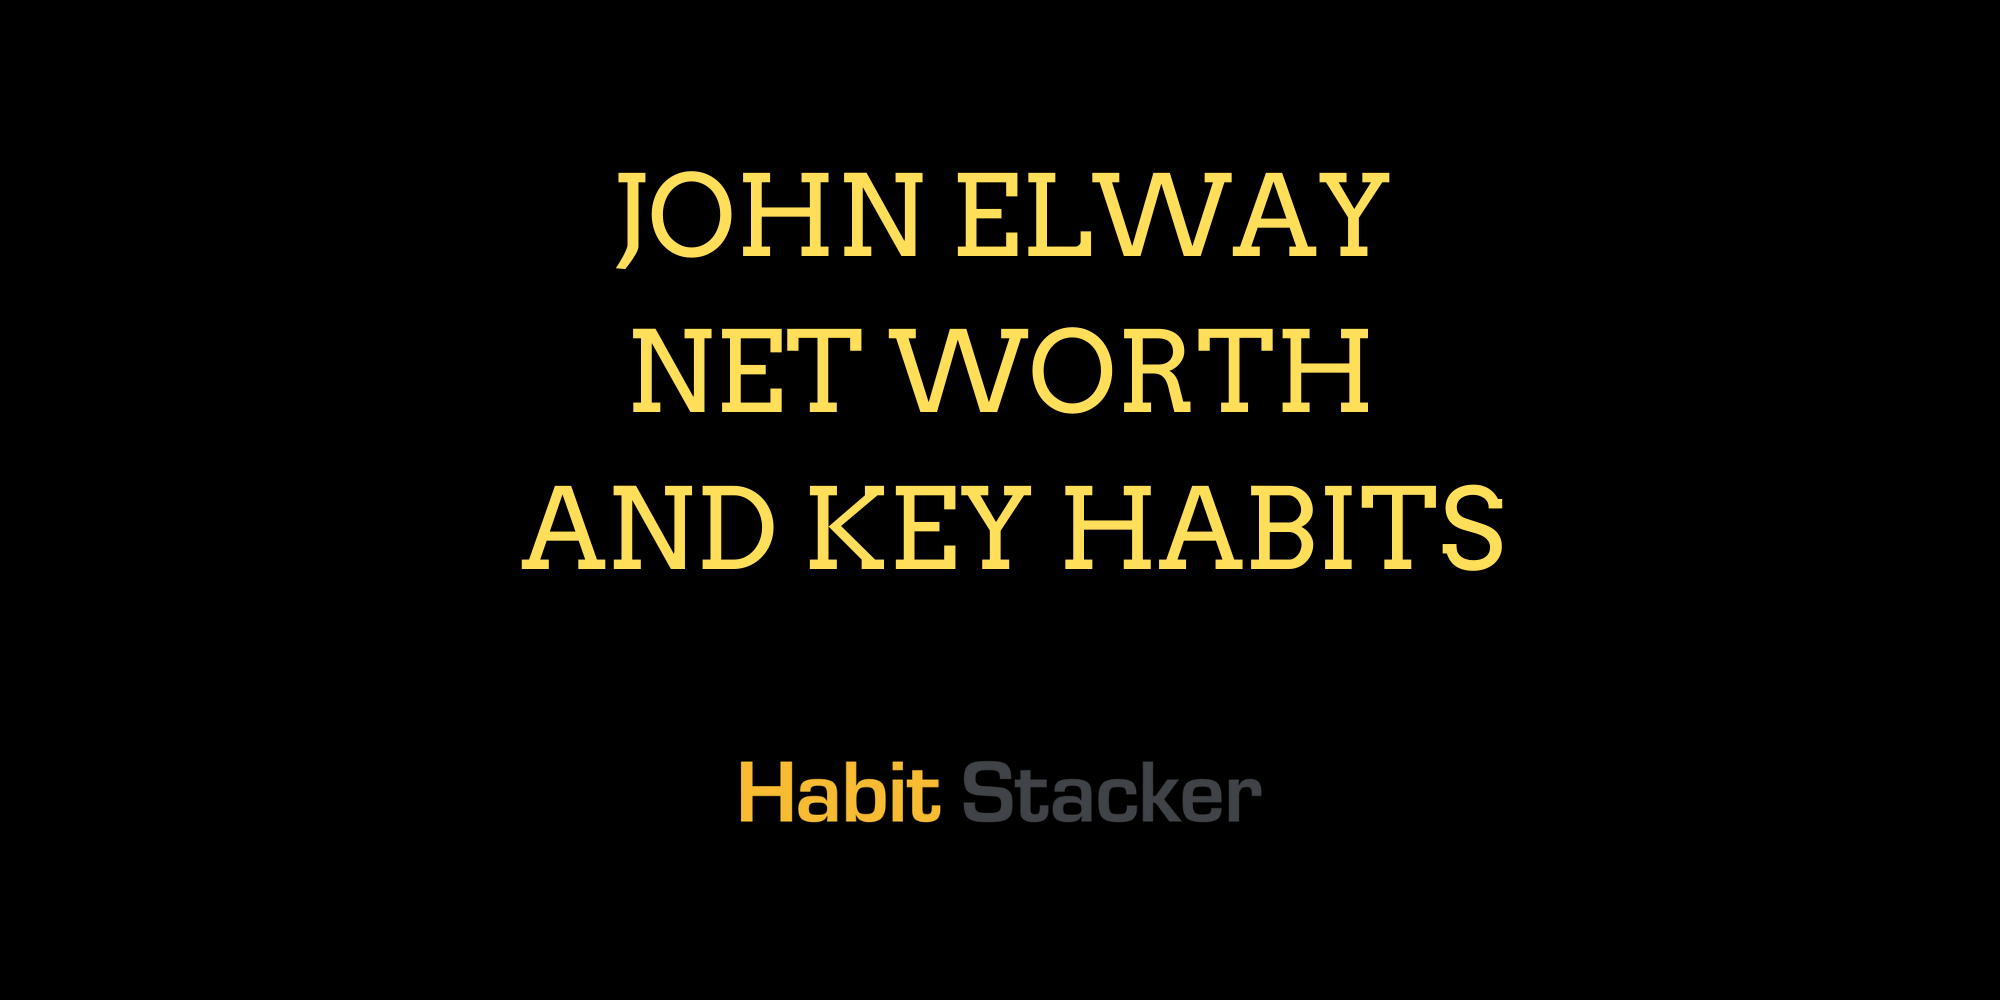 John Elway Net Worth and Key Habits